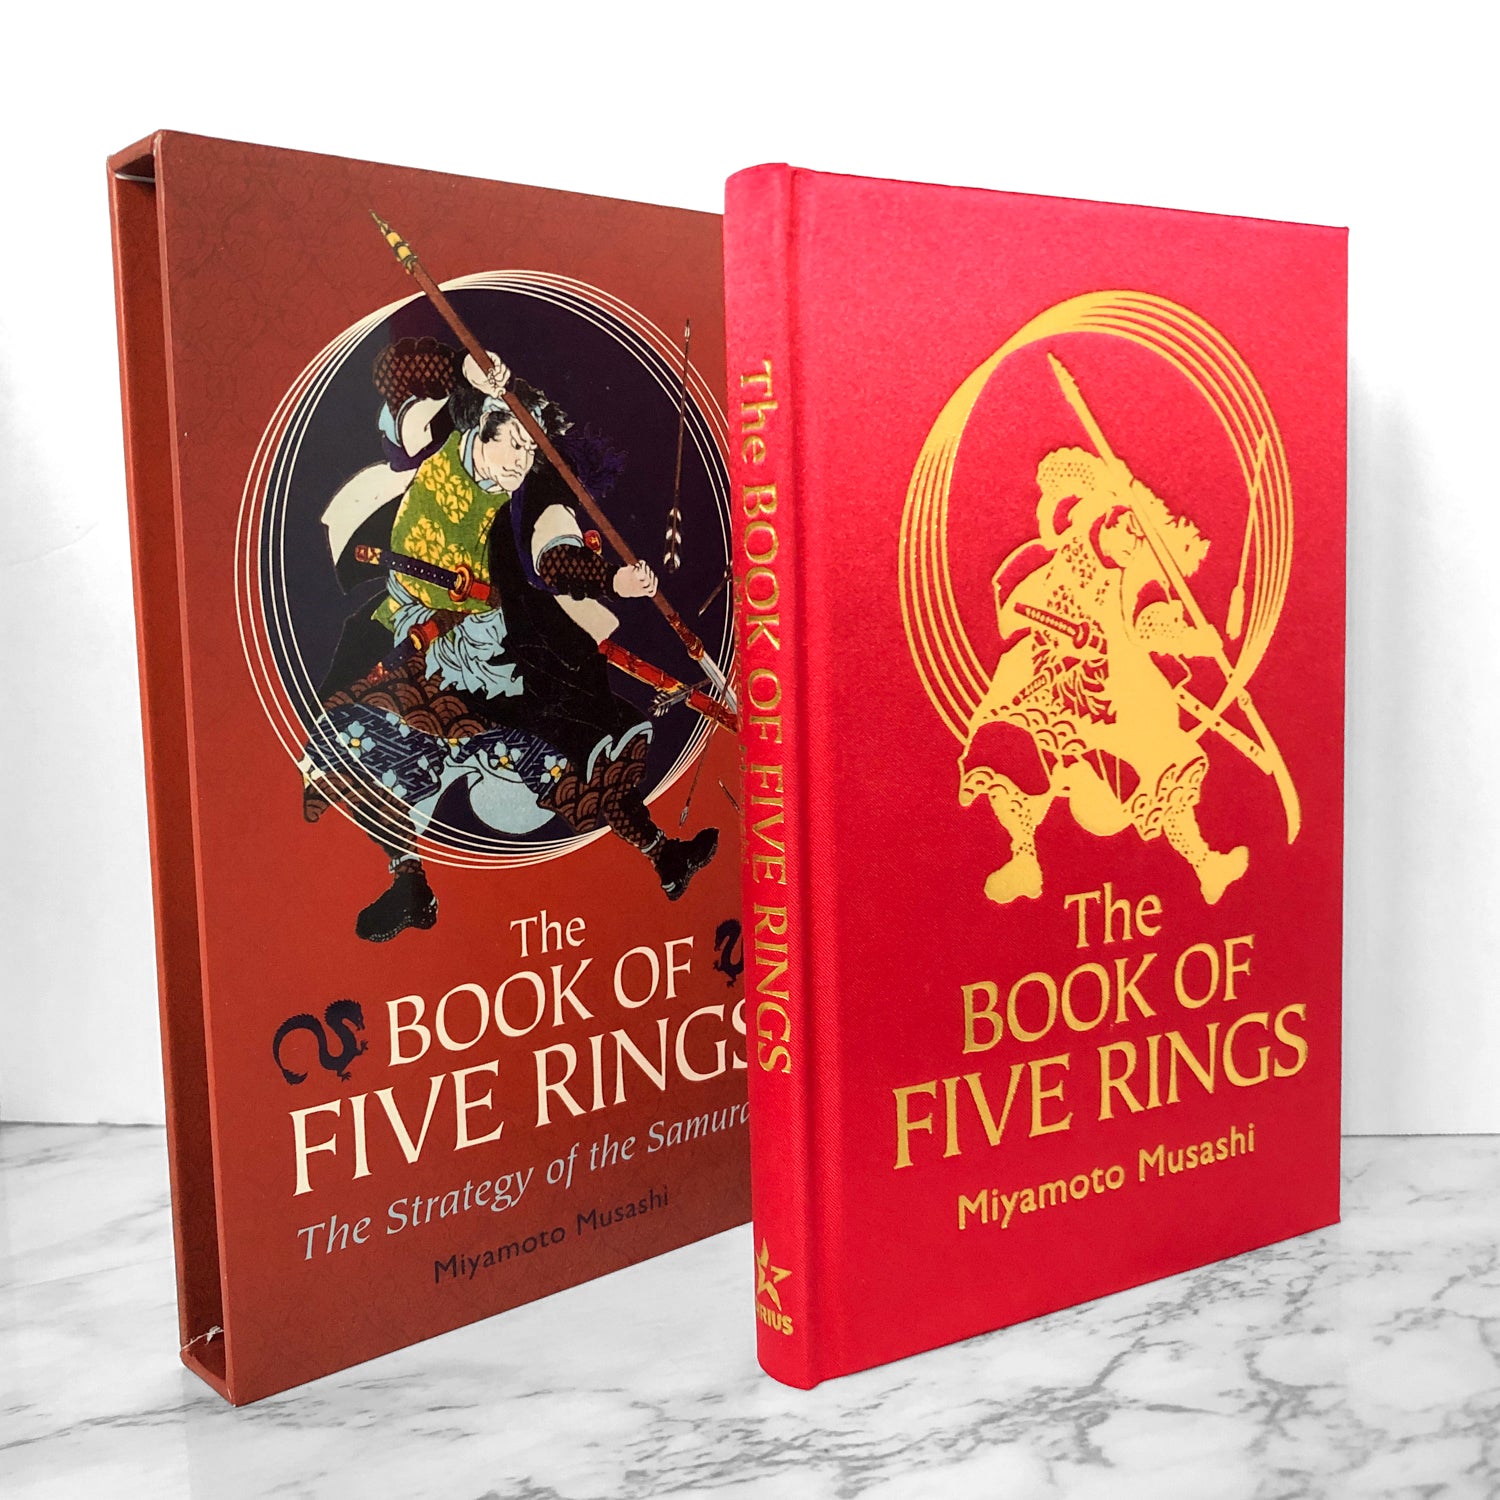  El Libro De Los Cinco Anillos / Book of Five Rings: The Classic  Guide to Strategy (Spanish Edition): 9789875020962: Musashi, Miyamoto:  Libros